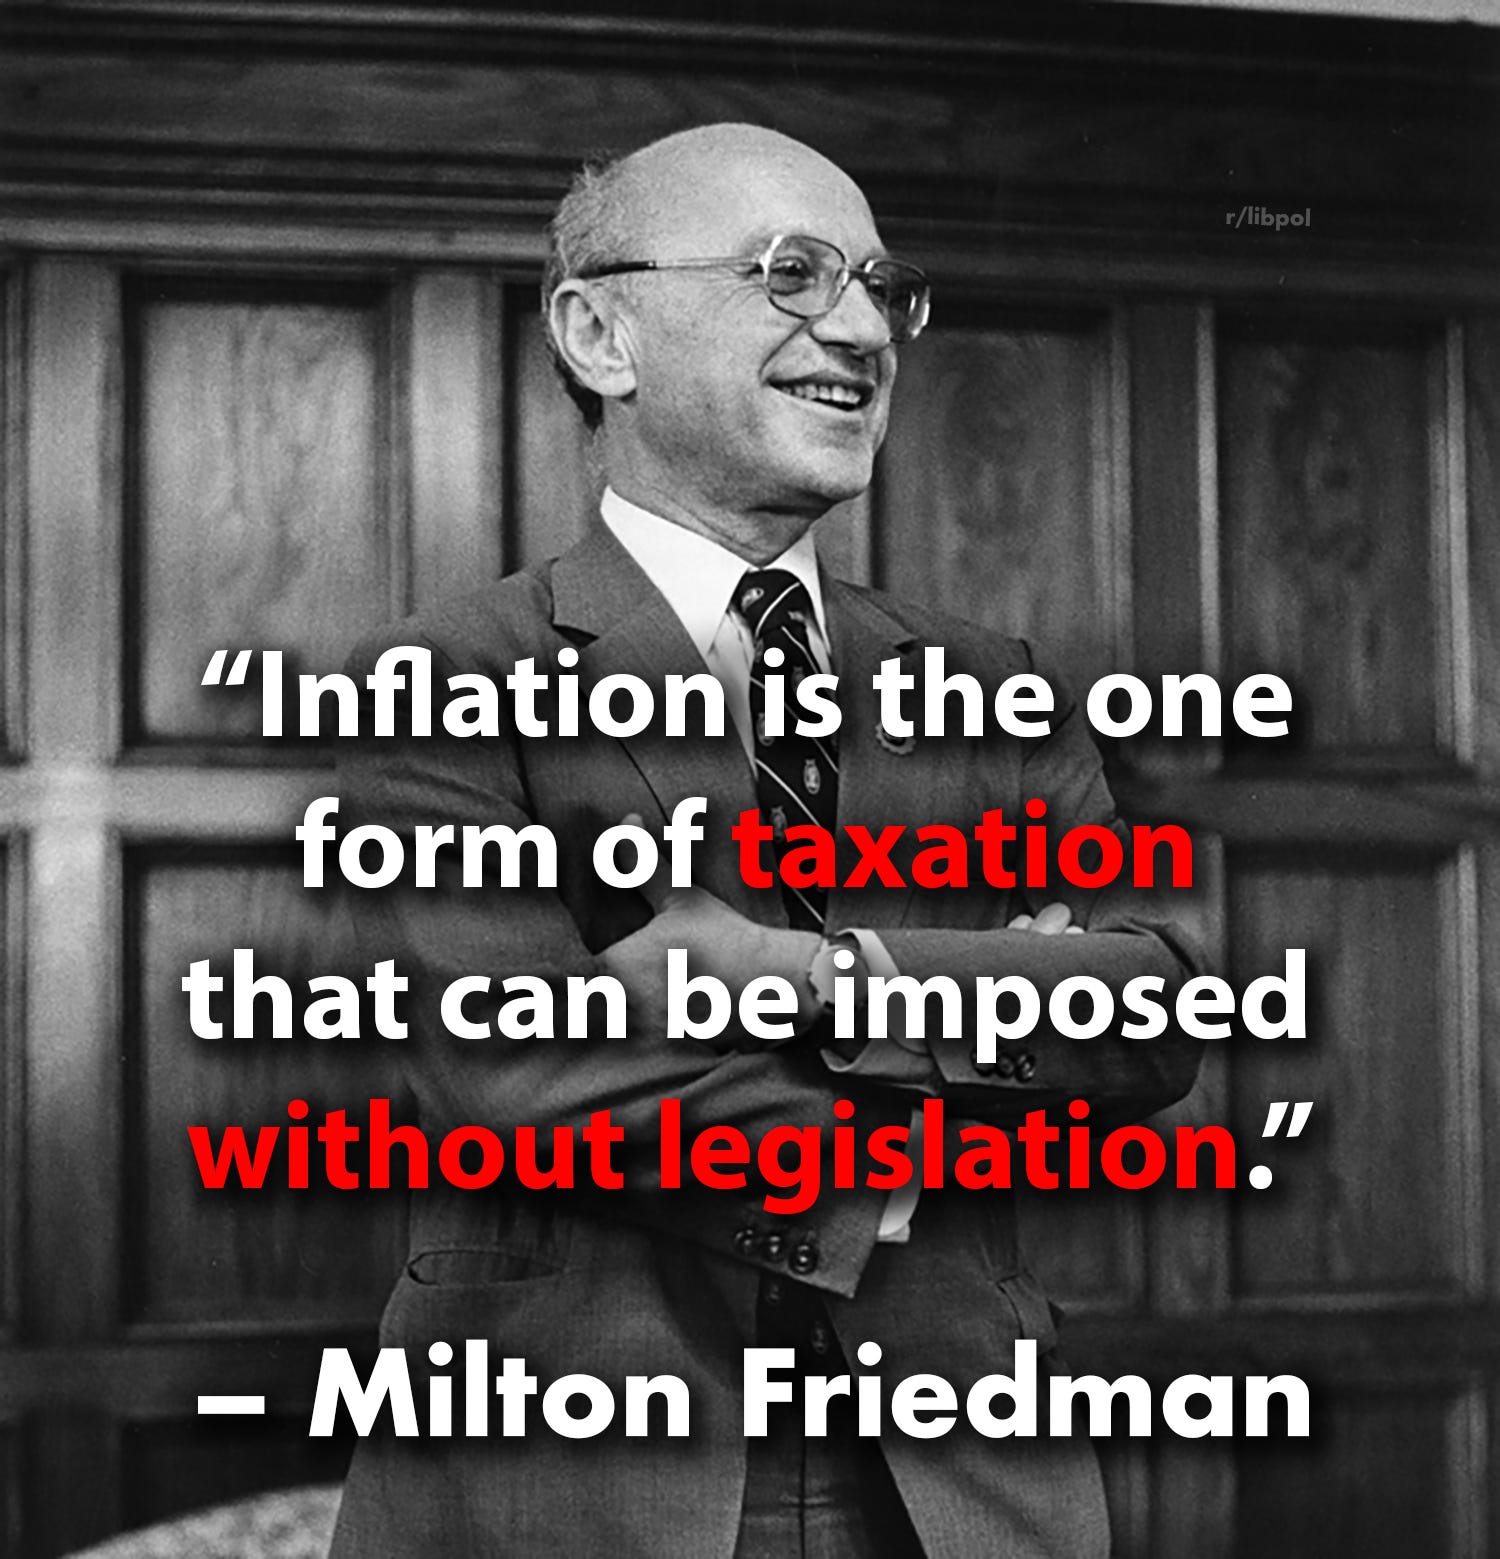 source: https://www.reddit.com/r/economy/comments/11ug55l/milton_friedman_on_inflation/